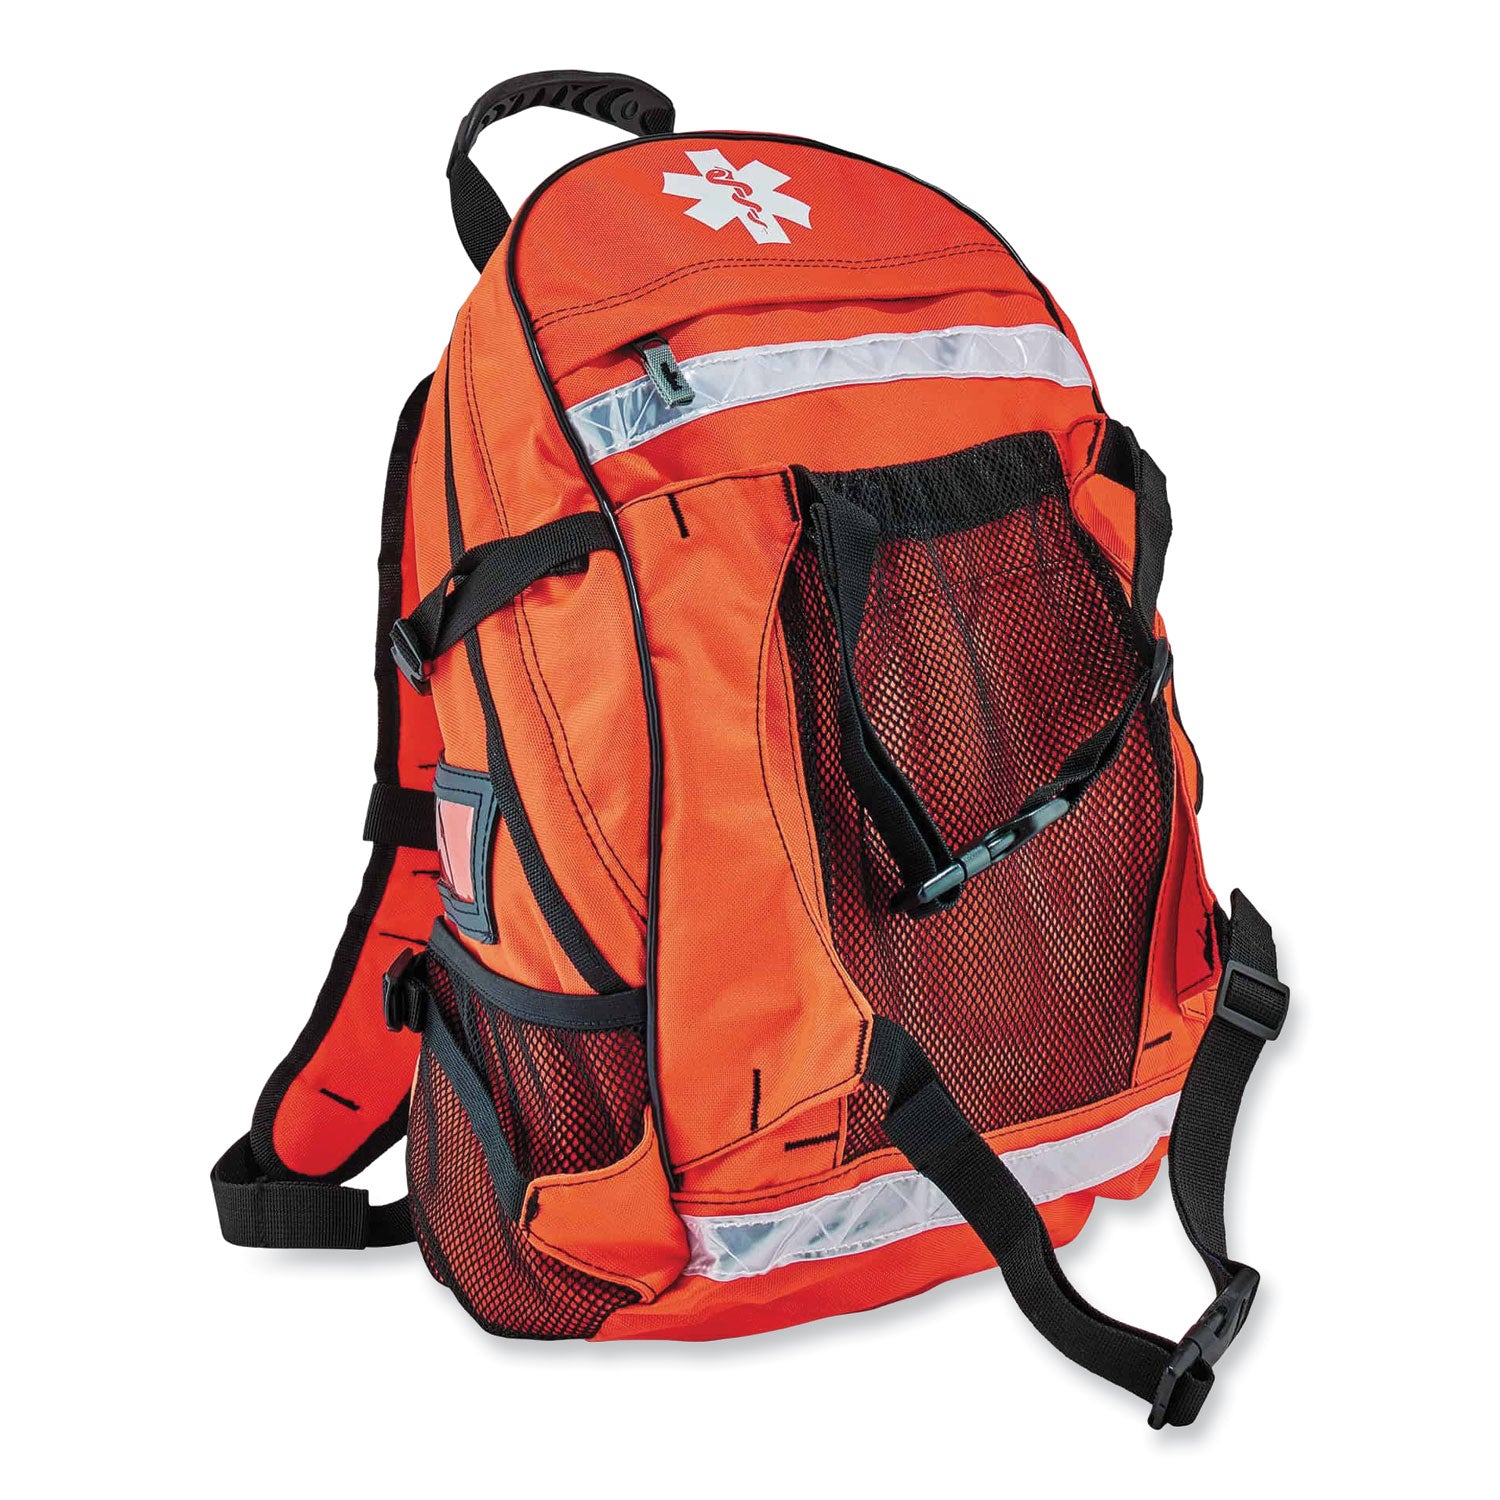 arsenal-5243-backpack-trauma-bag-7-x-12-x-175-orange-ships-in-1-3-business-days_ego13488 - 1